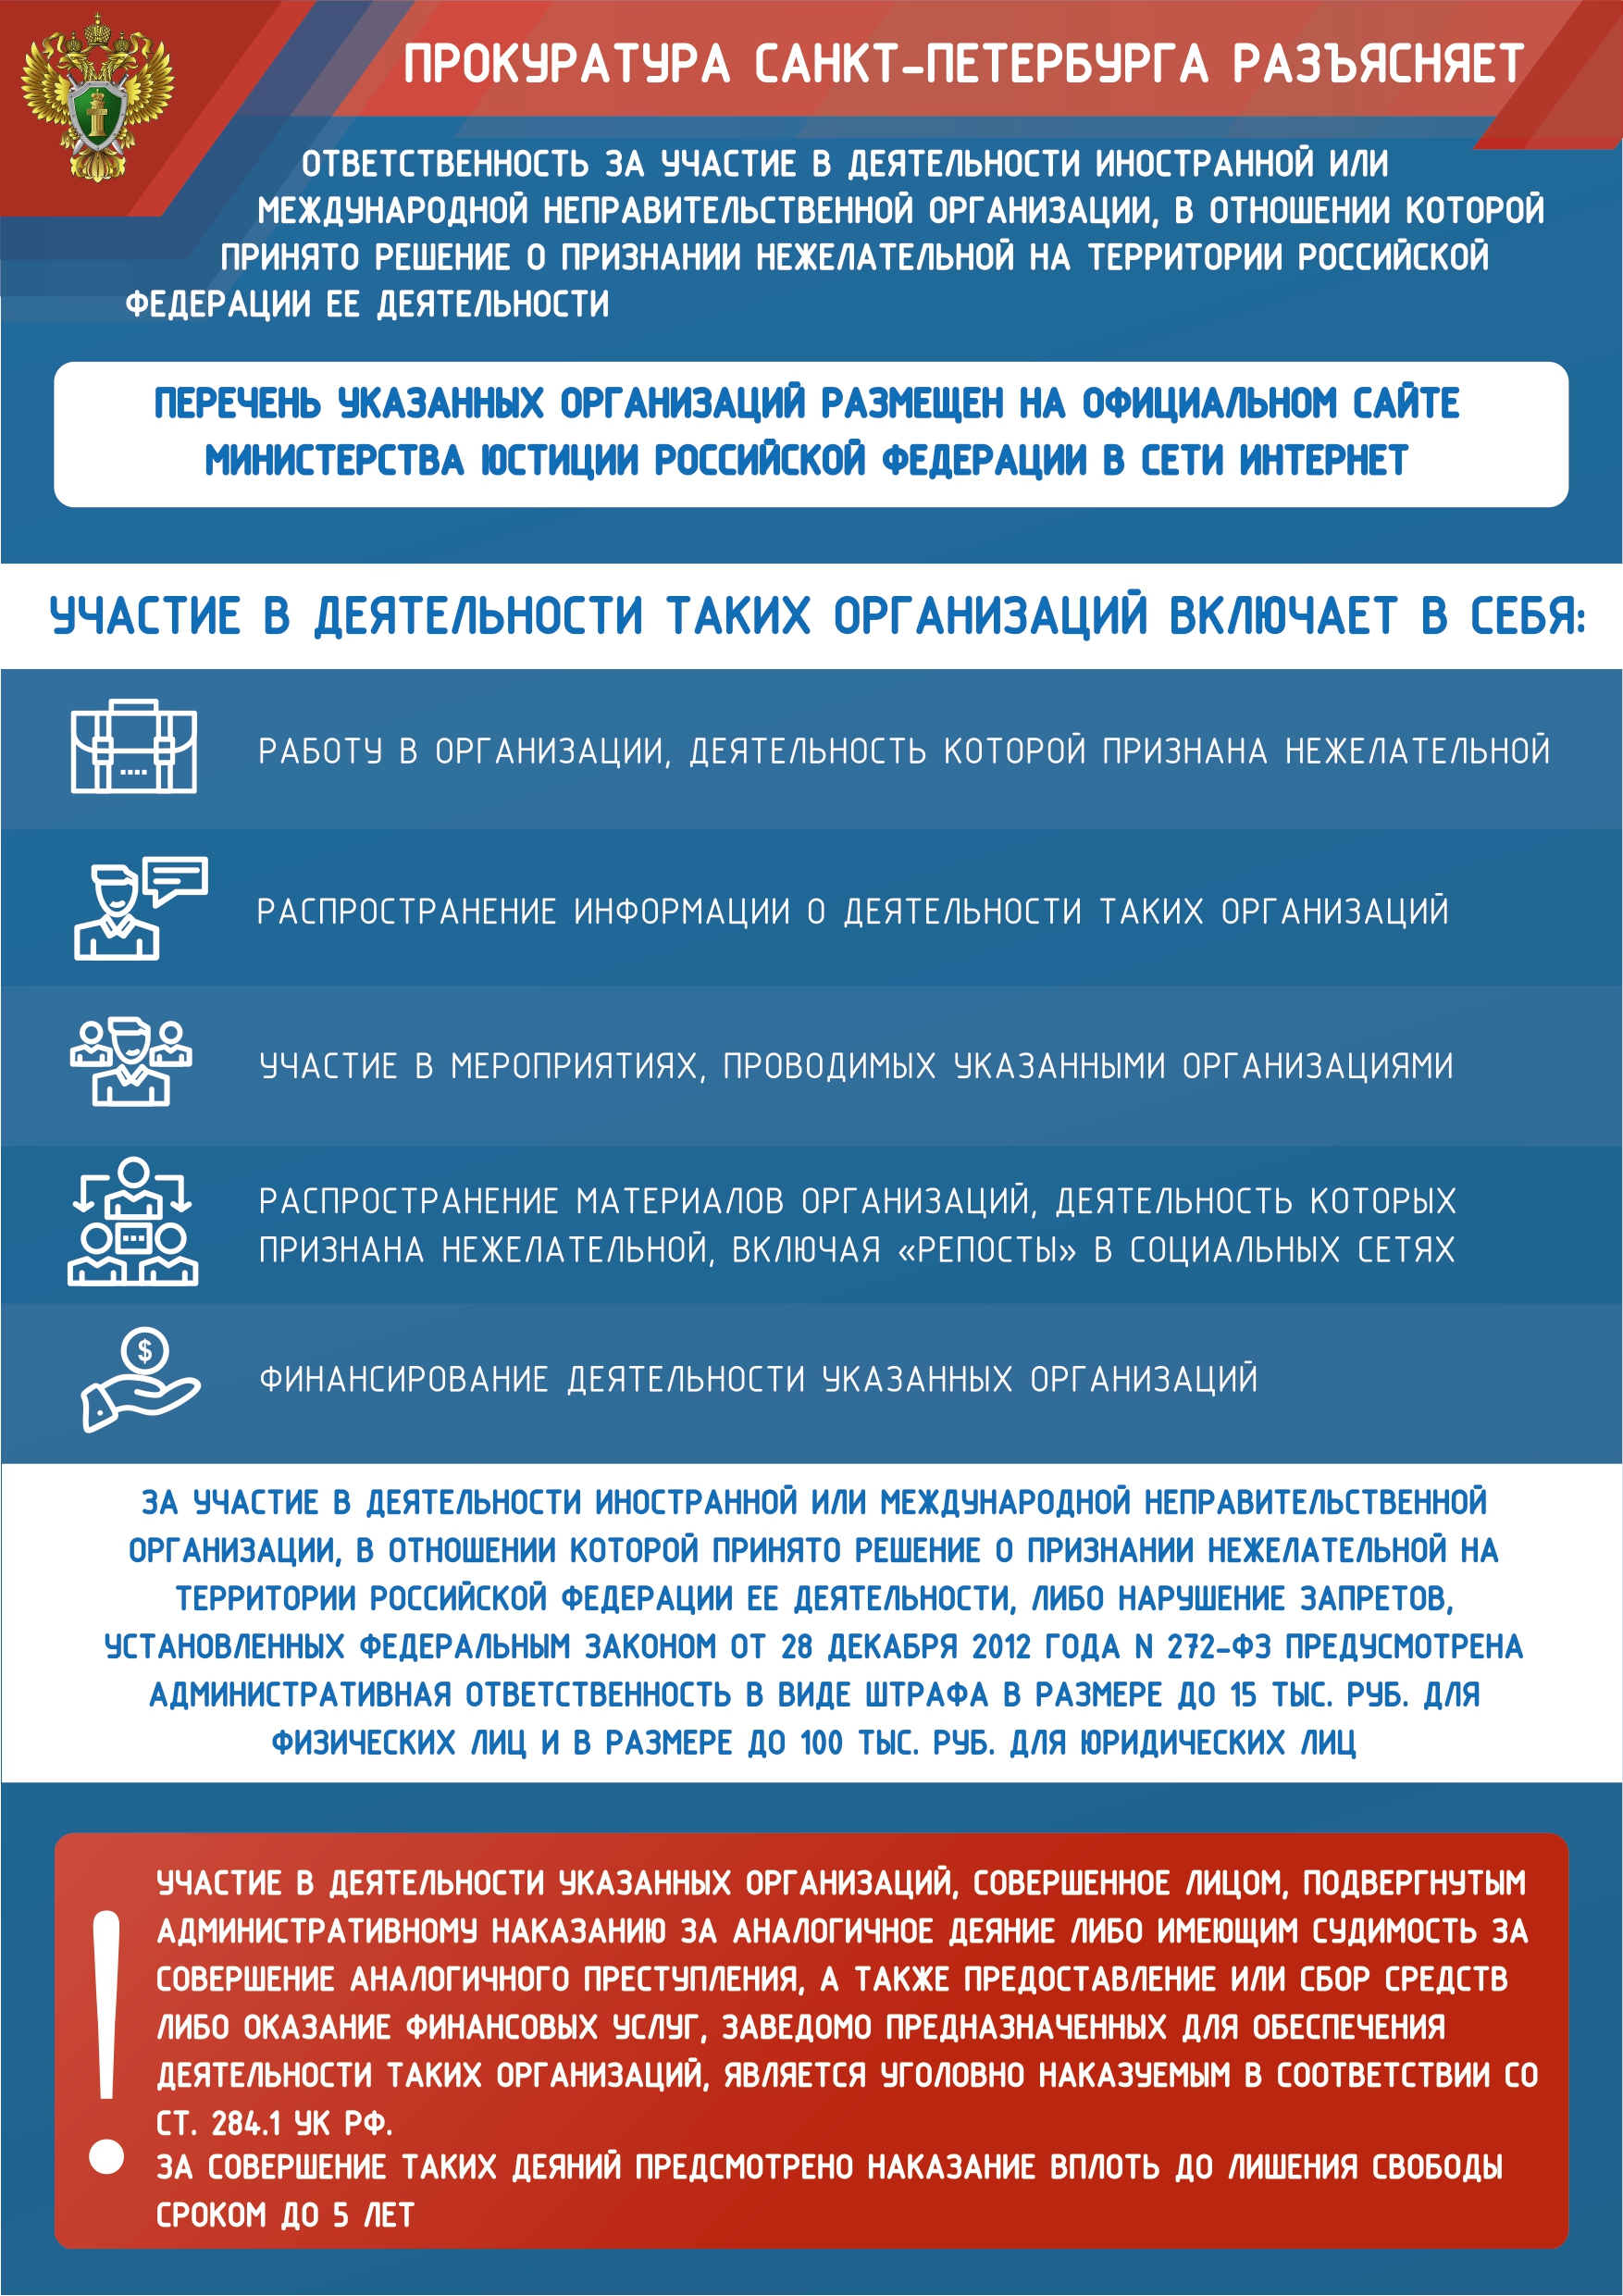 Informatsionny material Prokuratury Sankt Peterburga page 0001